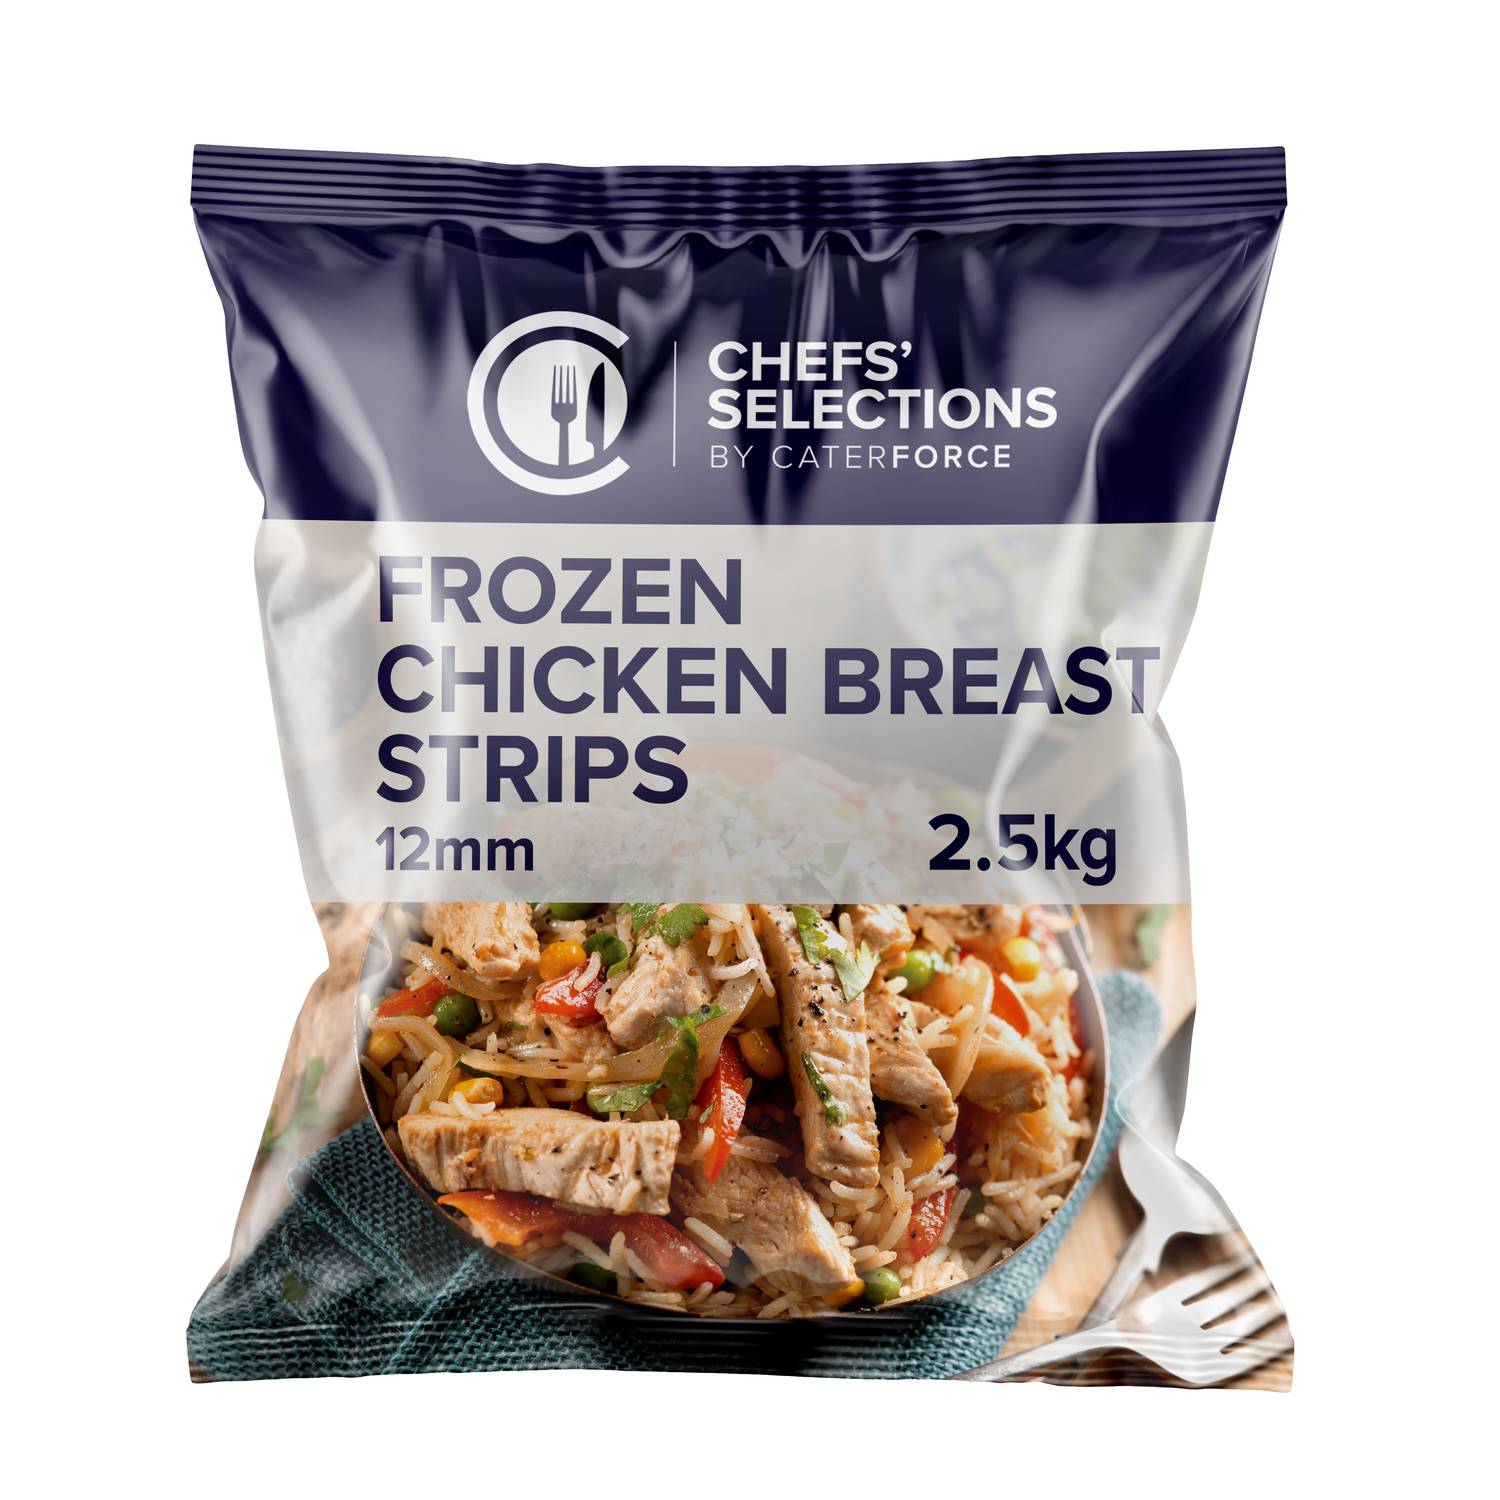 Chefs’ Selections Frozen Chicken Breast Strips 12mm (4 x 2.5kg)